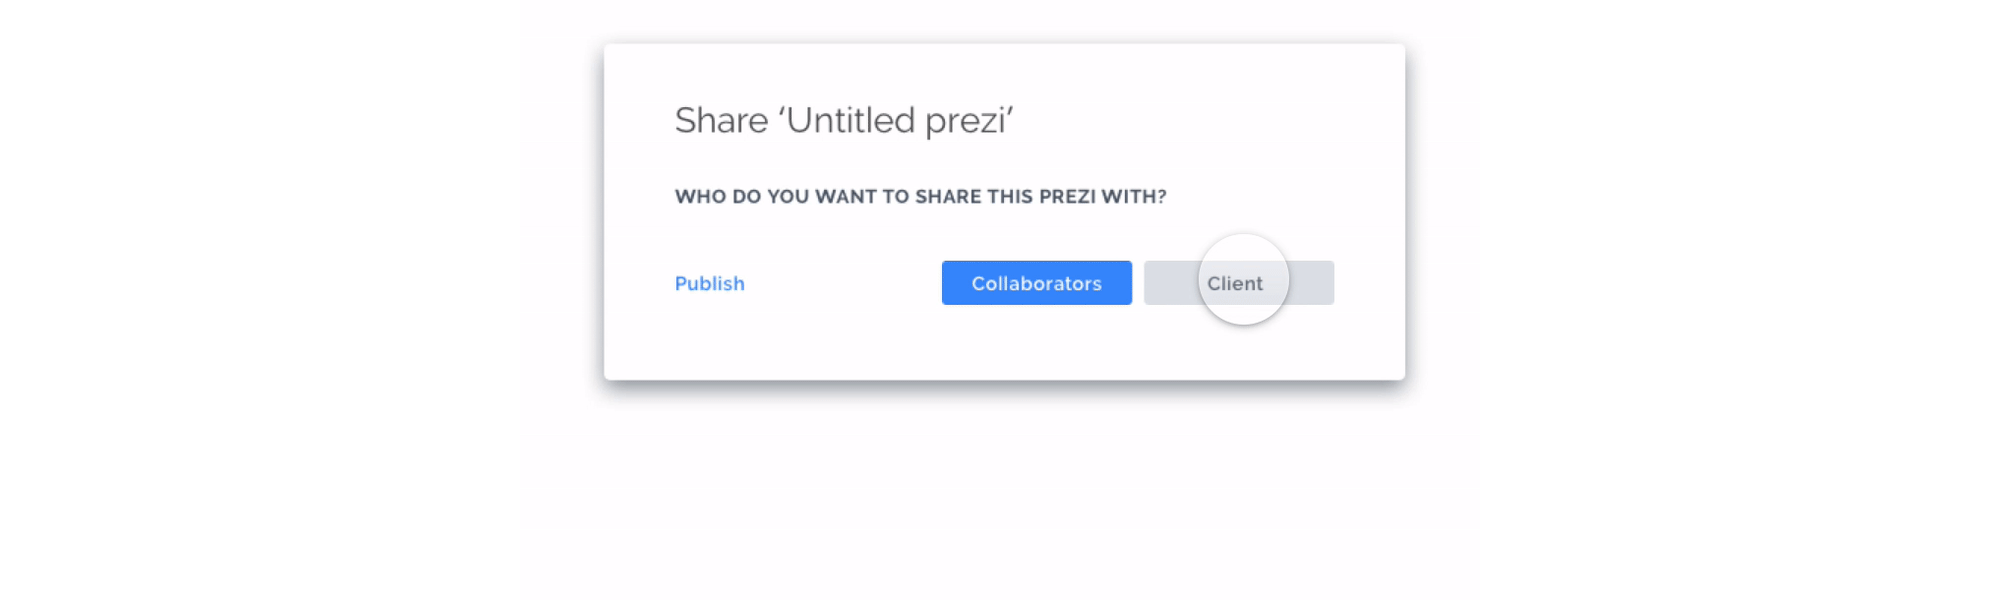 prezi share client prototype